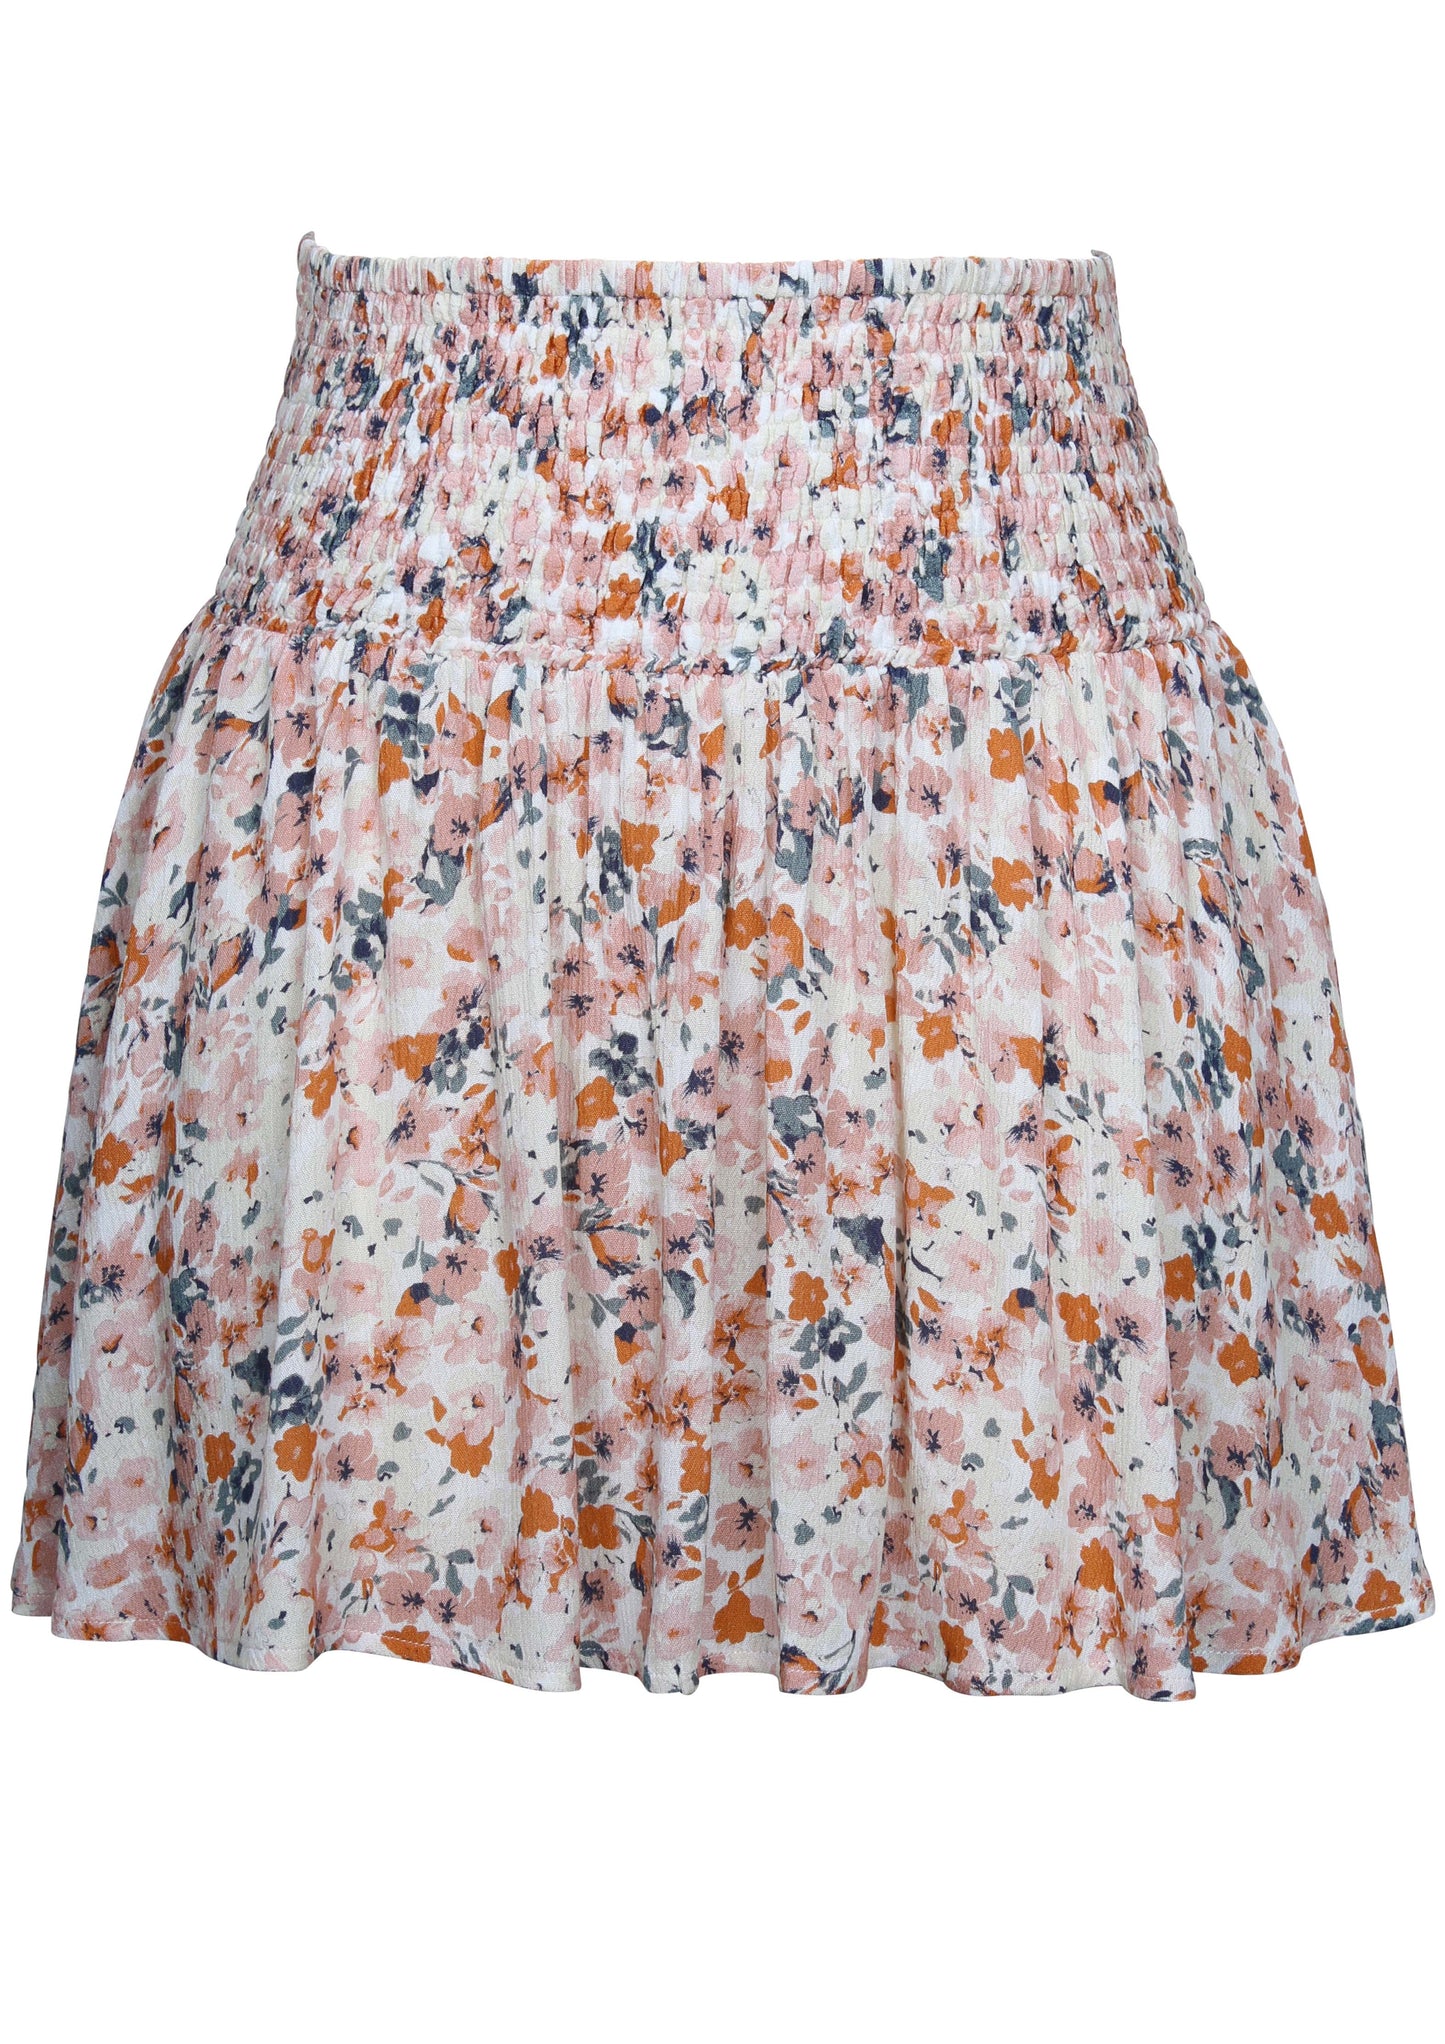 Samaria Sun Mini Skirt - Iridescent Swimwear Boutique